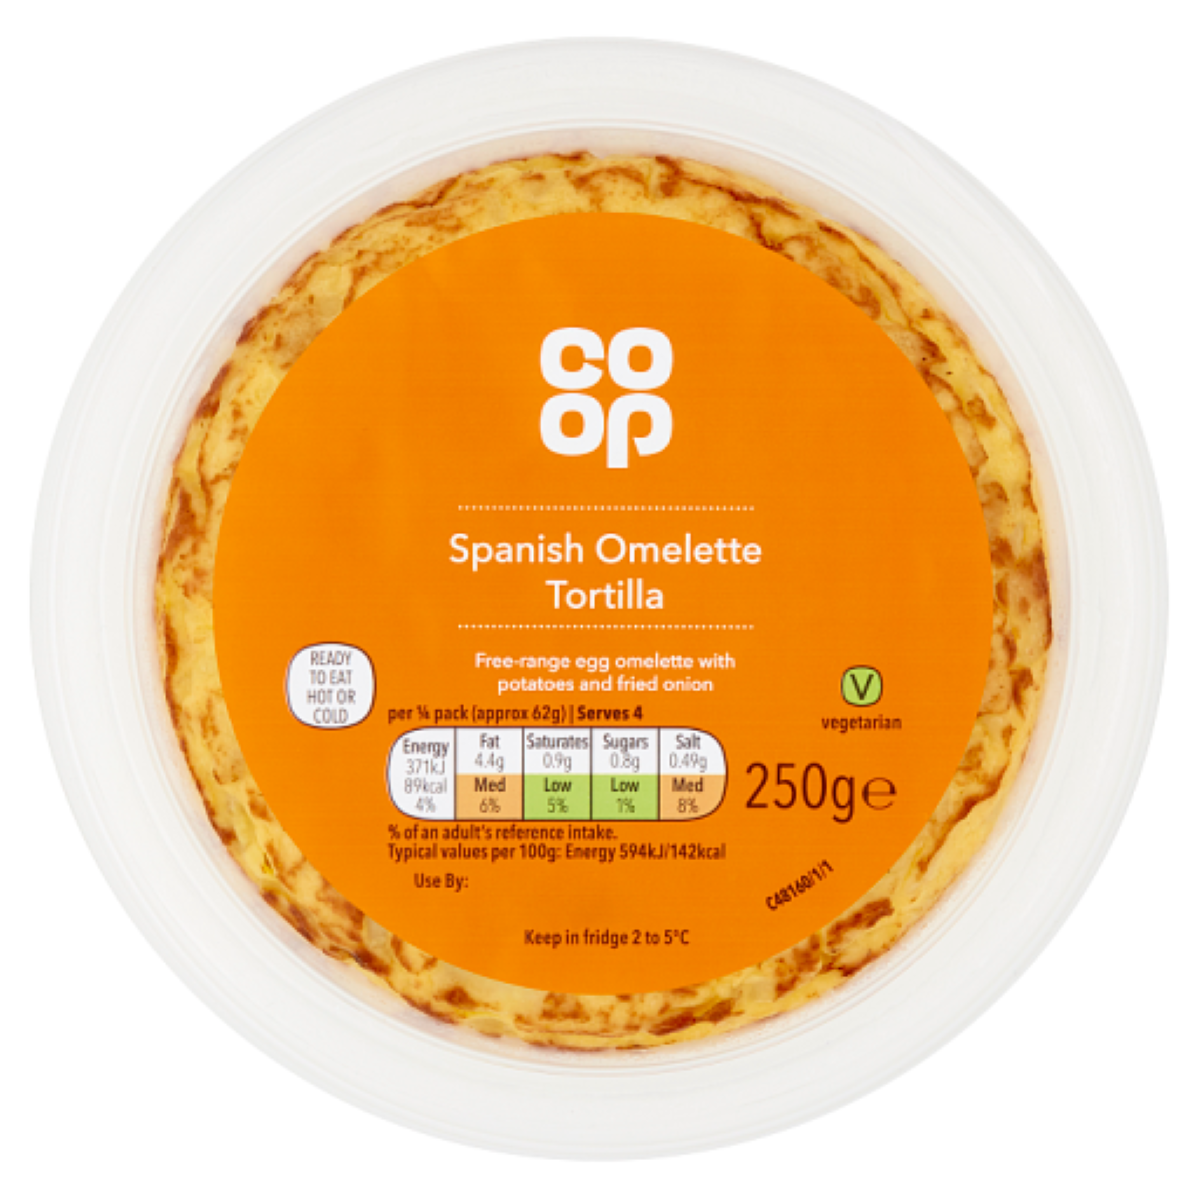 Co-ор Spanish Omelette Tortilla 250g